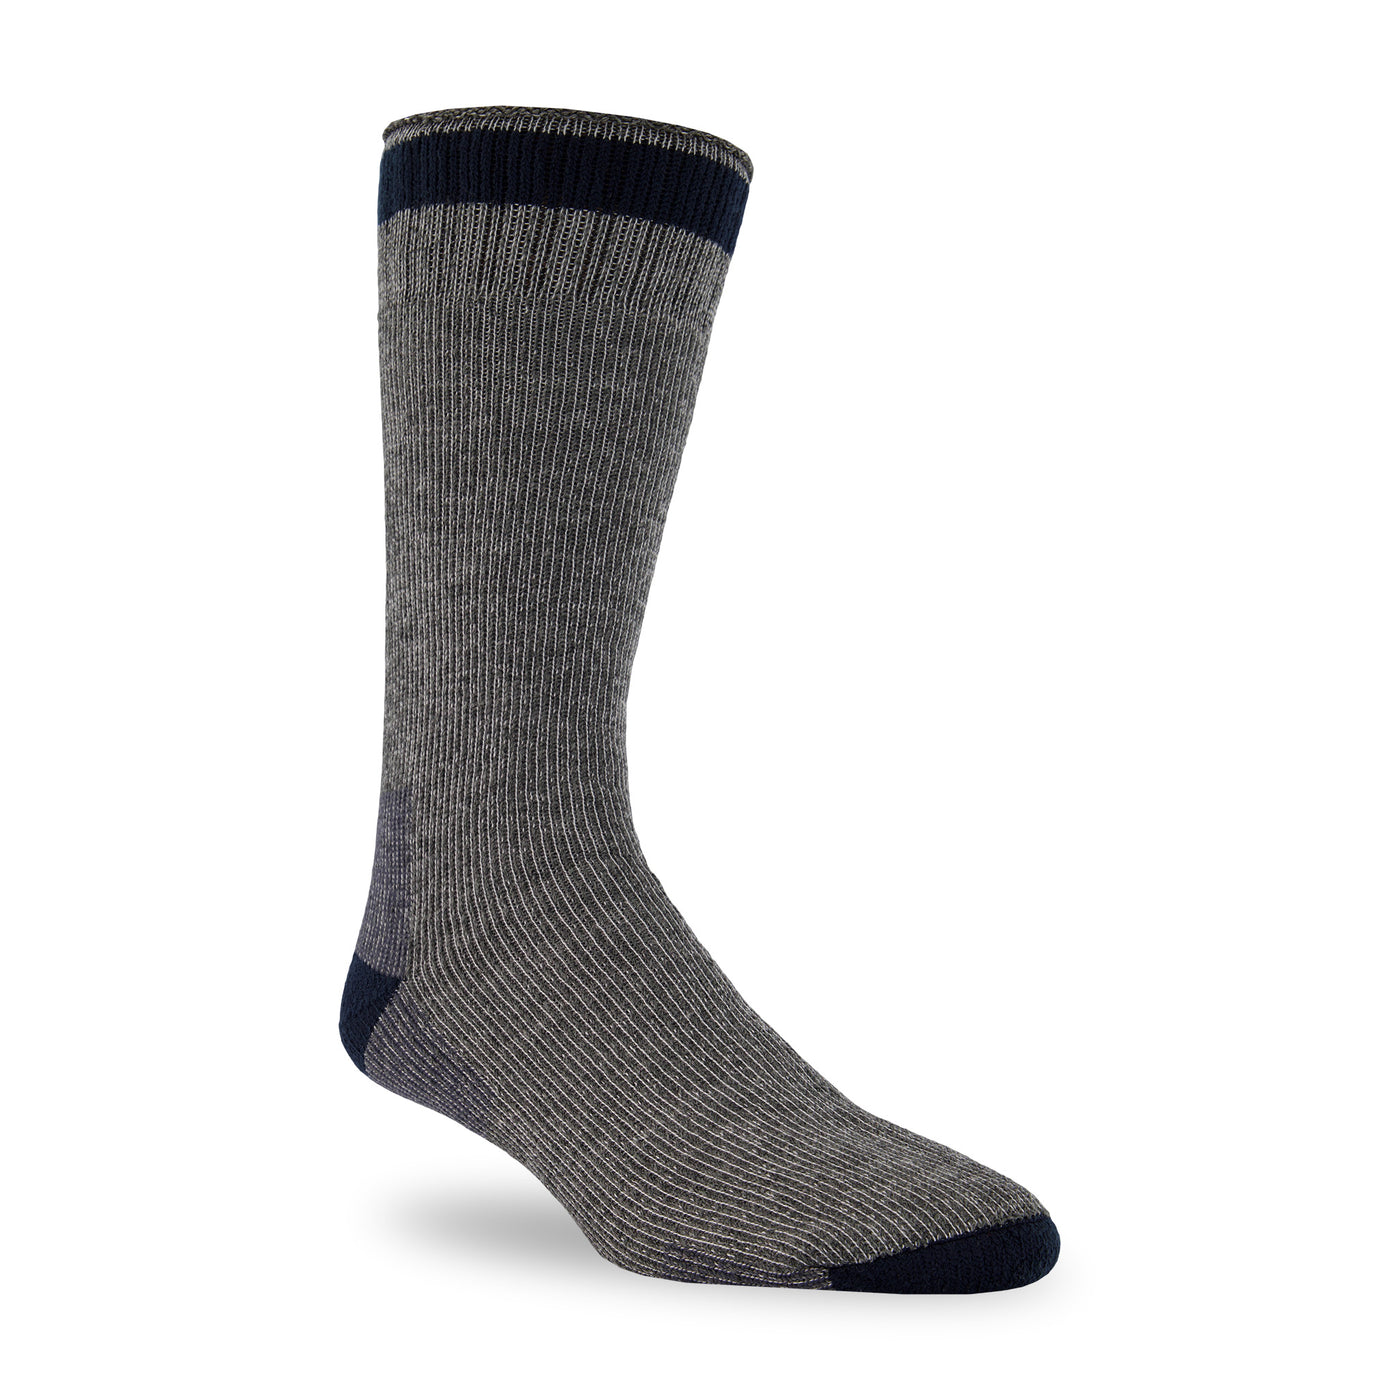  Grey/Navy Acrylic Thermal Boot Socks 